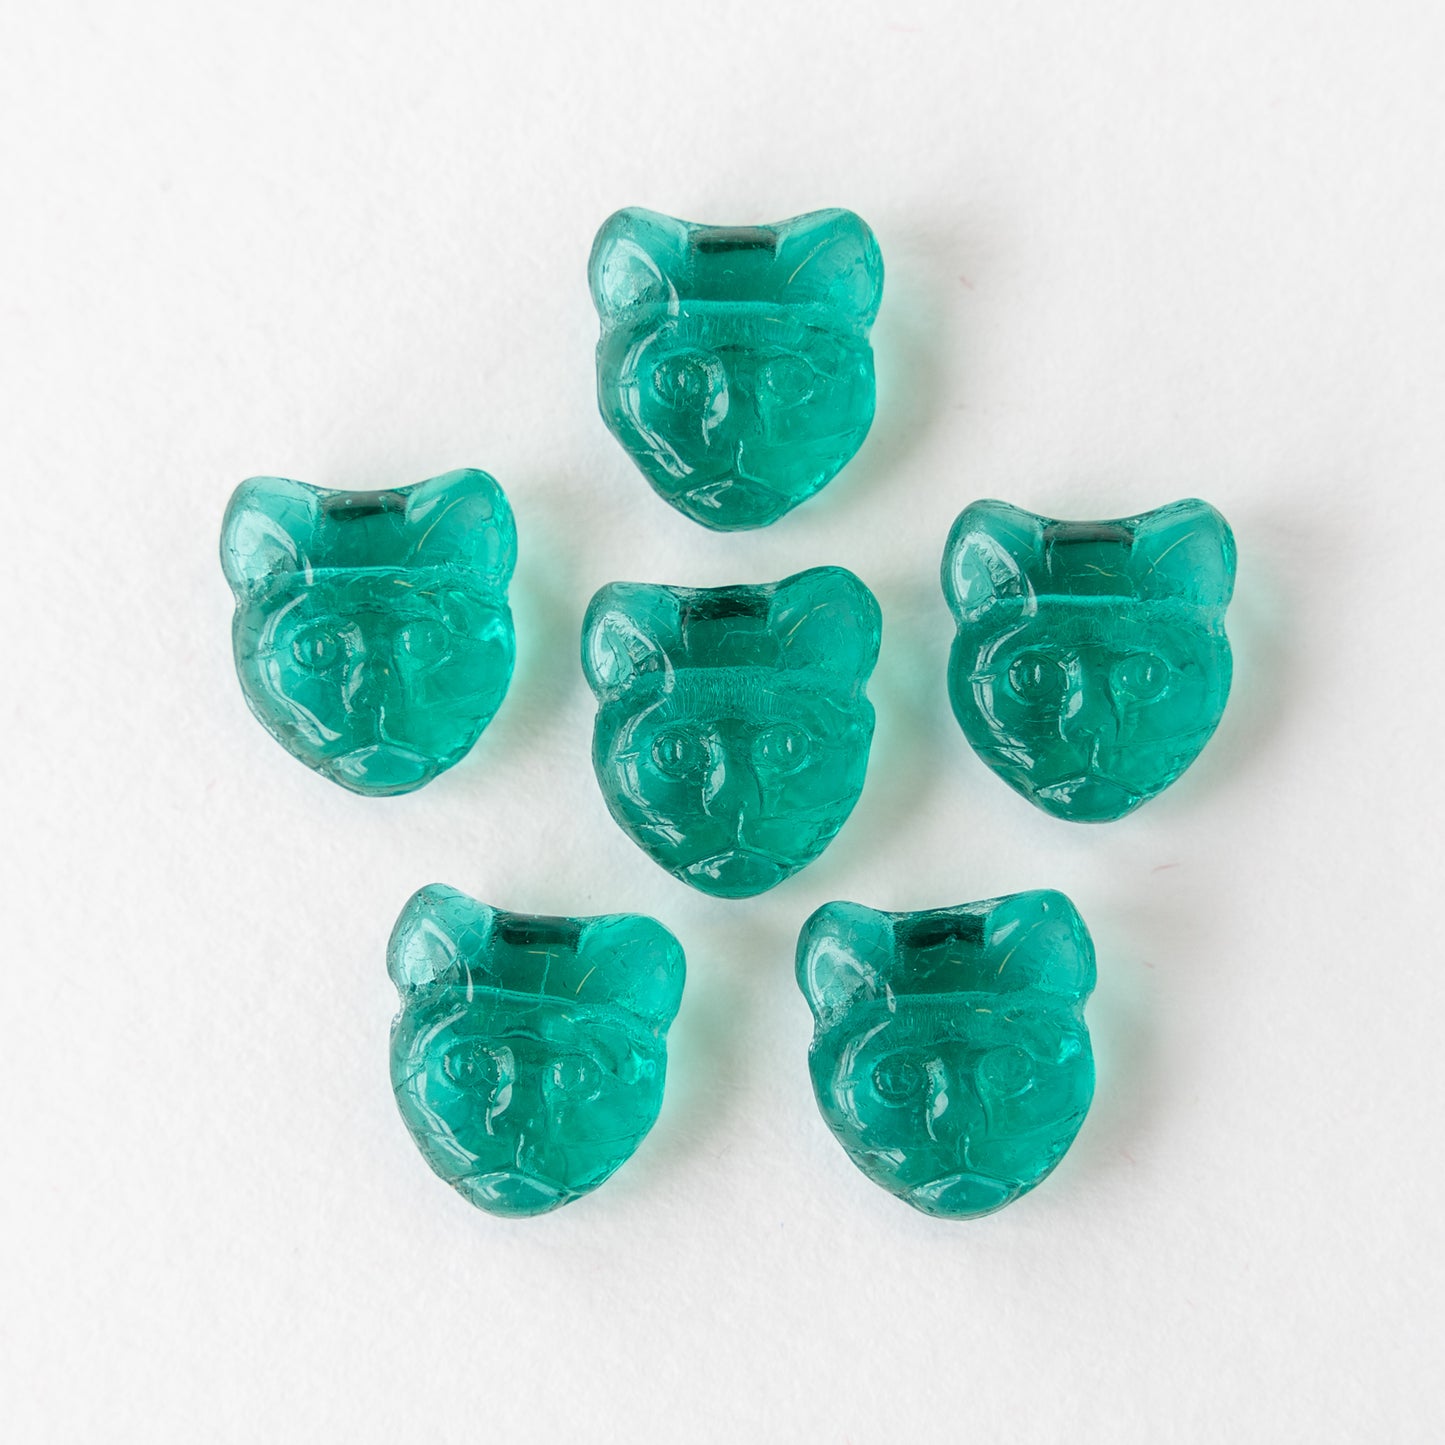 12mm Glass Cat Beads - Blue Mix with Aqua Wash - 10 Beads – funkyprettybeads